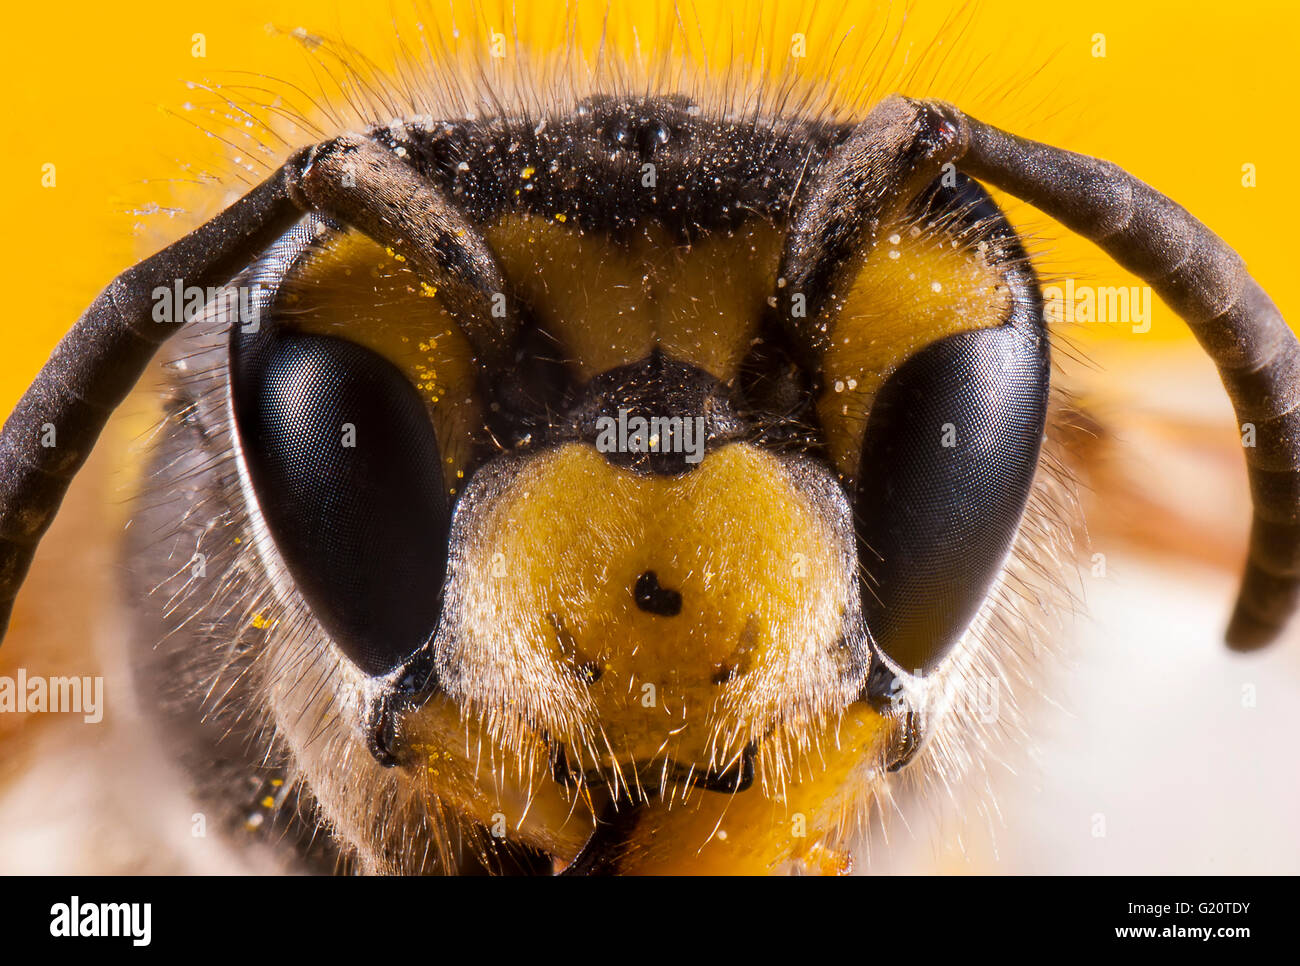 Bees close up face shot. Stack image. Stock Photo